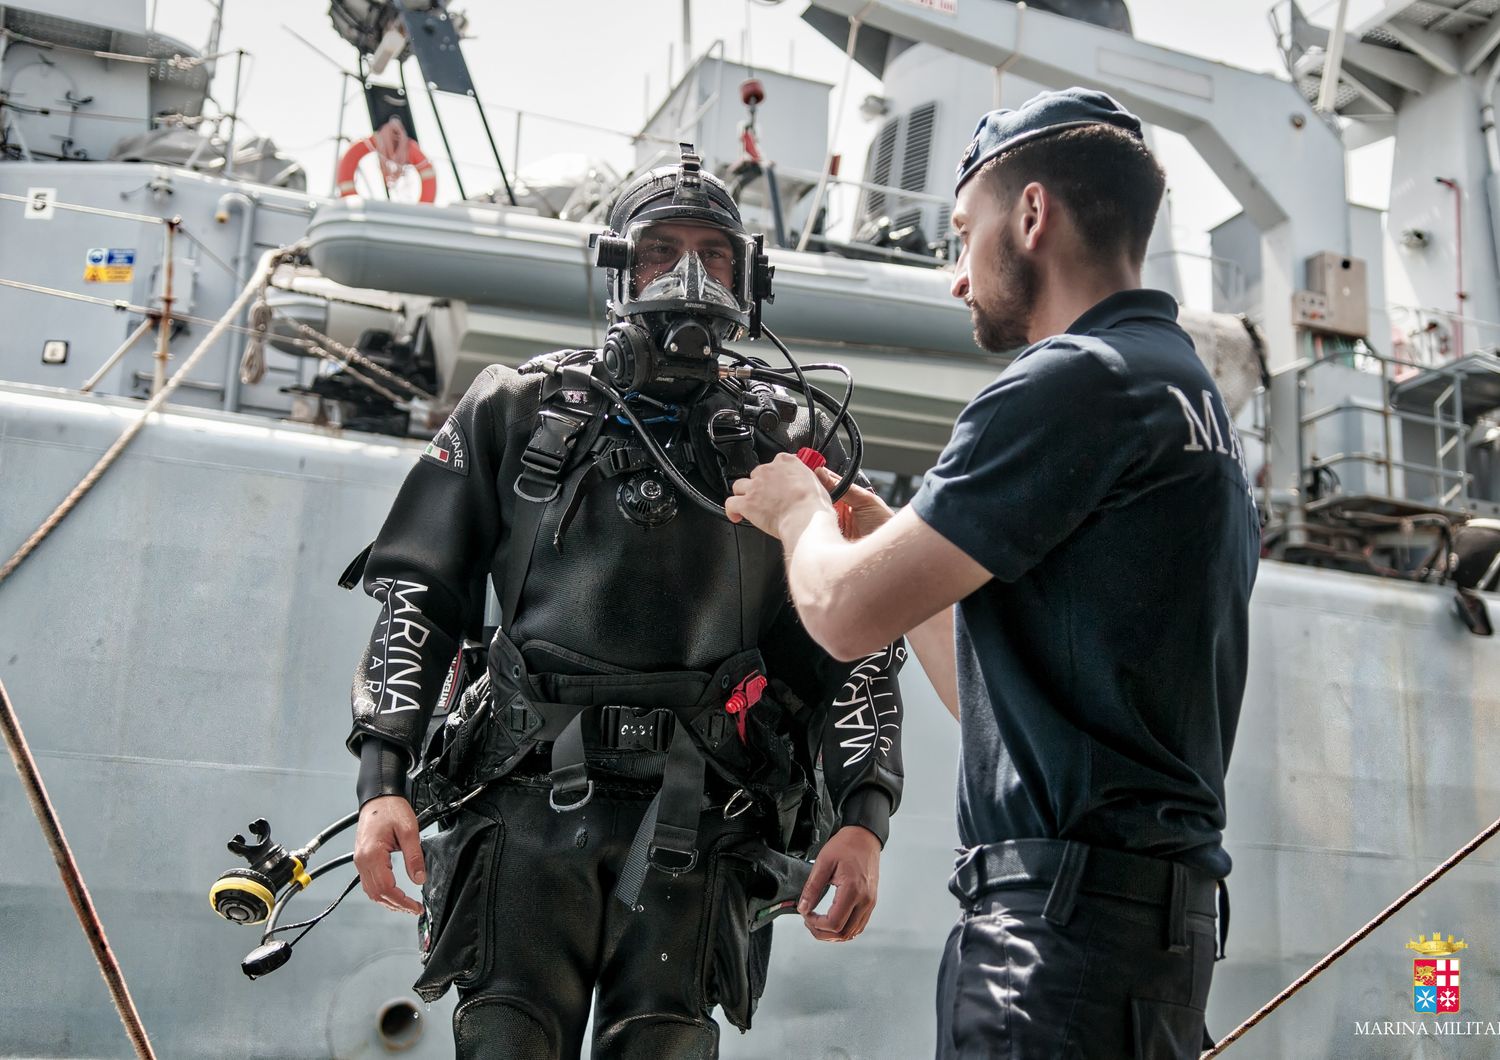 &nbsp; Marina Militare recupero relitto palombari - marina